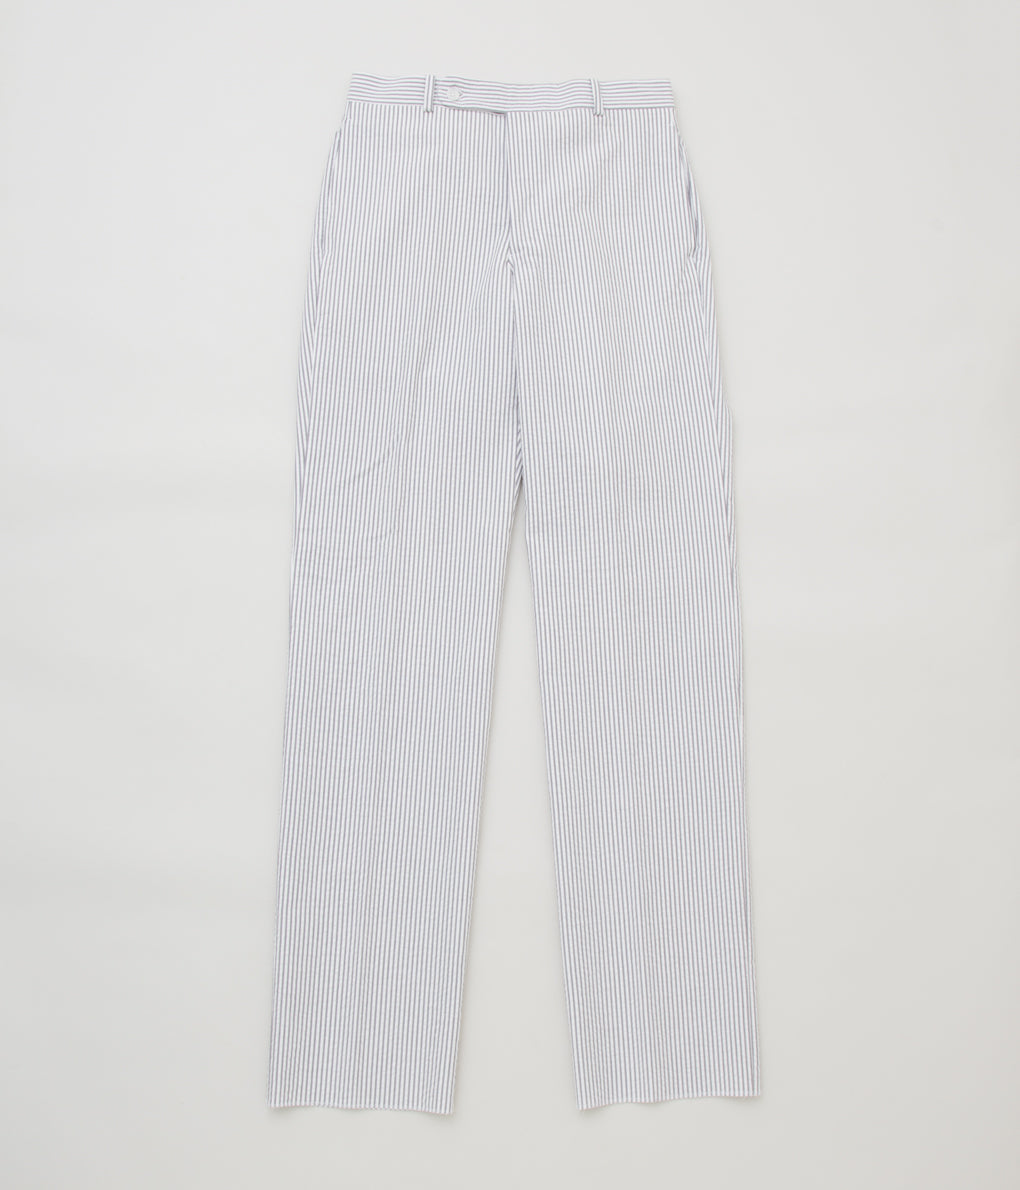 INDIVIDUALIZED CLOTHING "SEERSUCKER PANTS" (GRAY STRIPE)